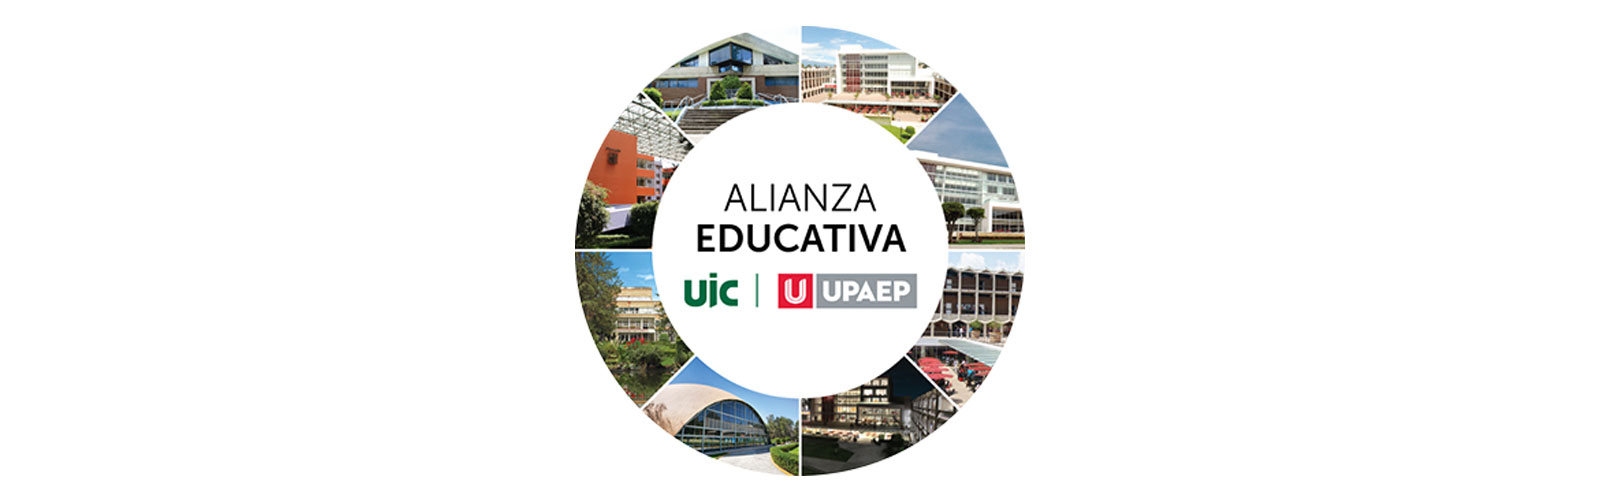 Alianza UIC UPAEP